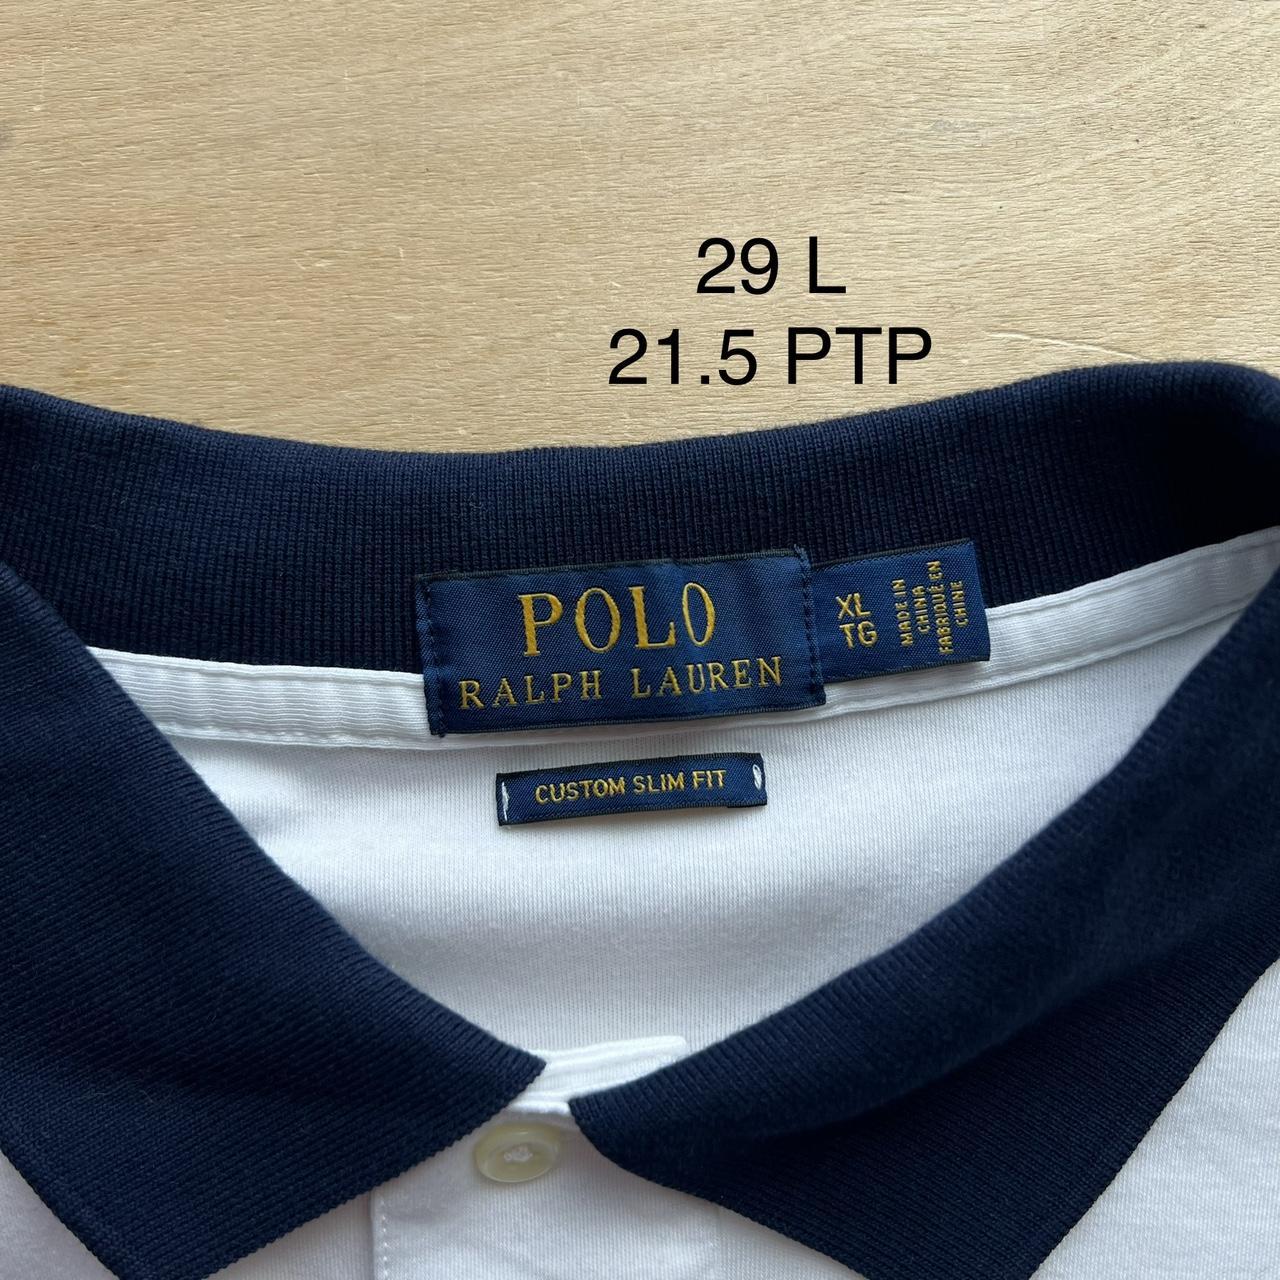 Polo Ralph Lauren Men's White and Navy Polo-shirts (3)